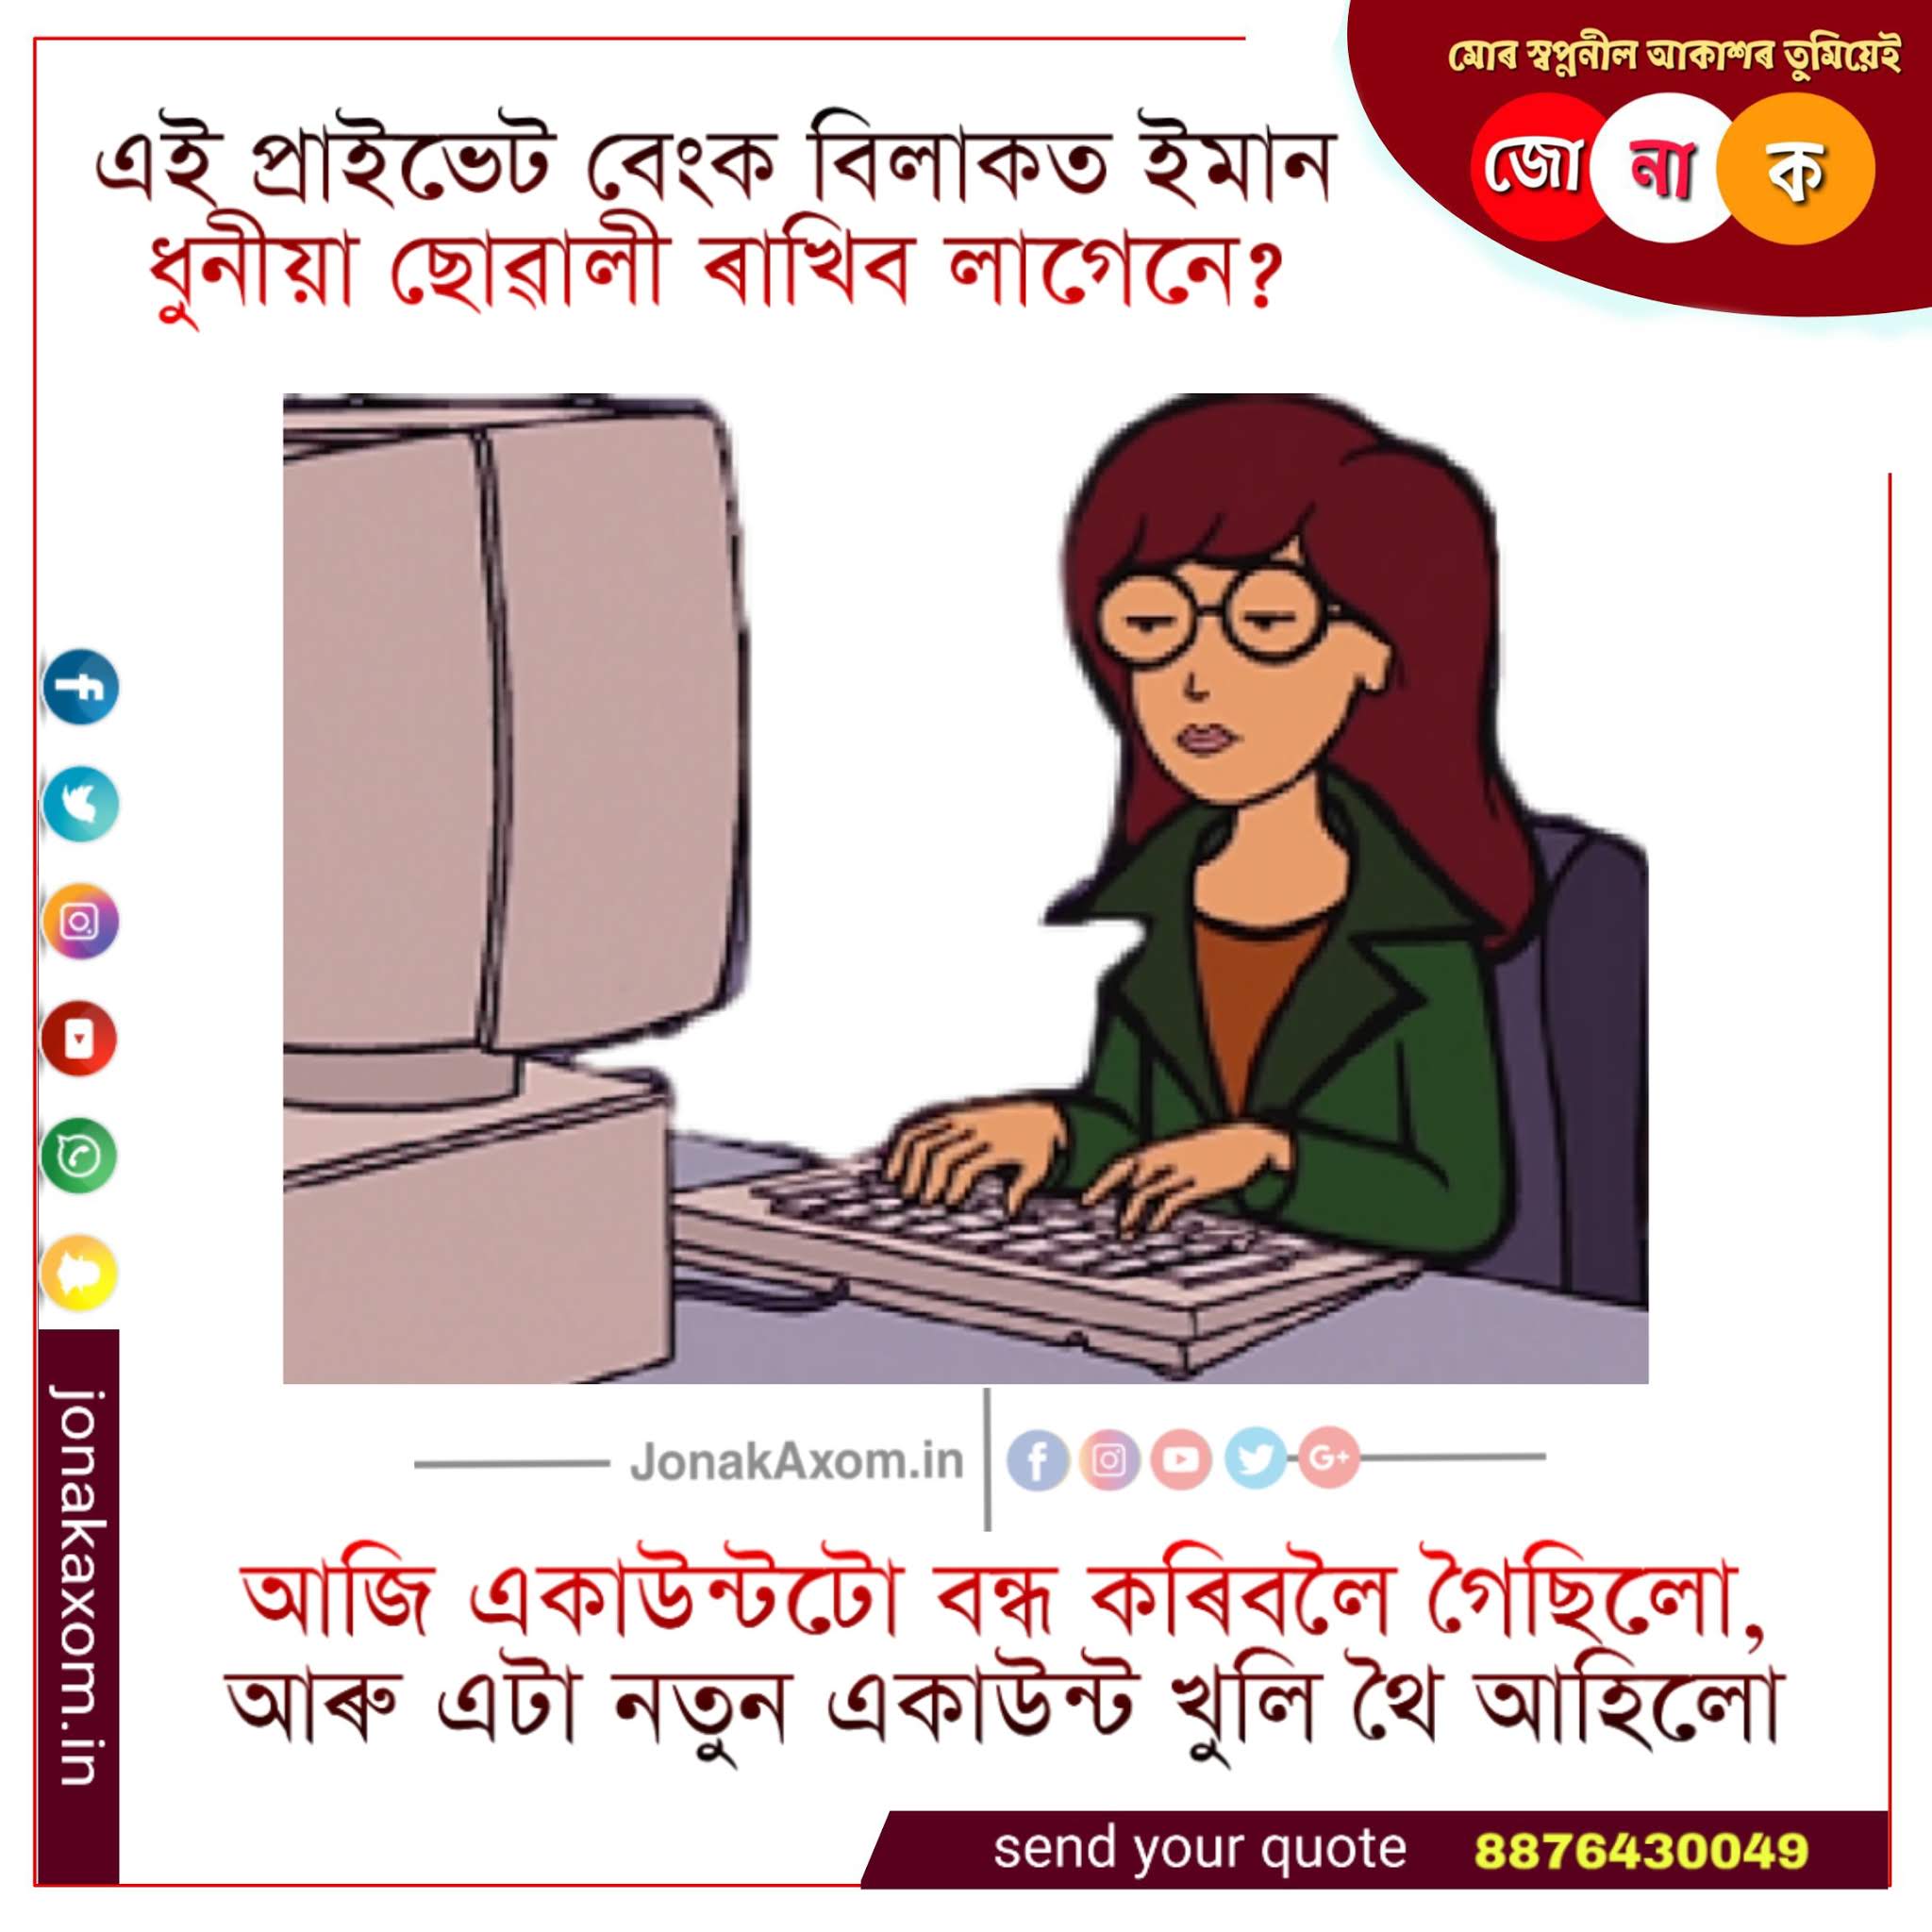 Best Funny Assamese Memes 2022 | Assamese Jokes Meme That Make Laugh -  JonakAxom- Assamese Quotes, Blogging , Business Ideas, Tips And Tricks